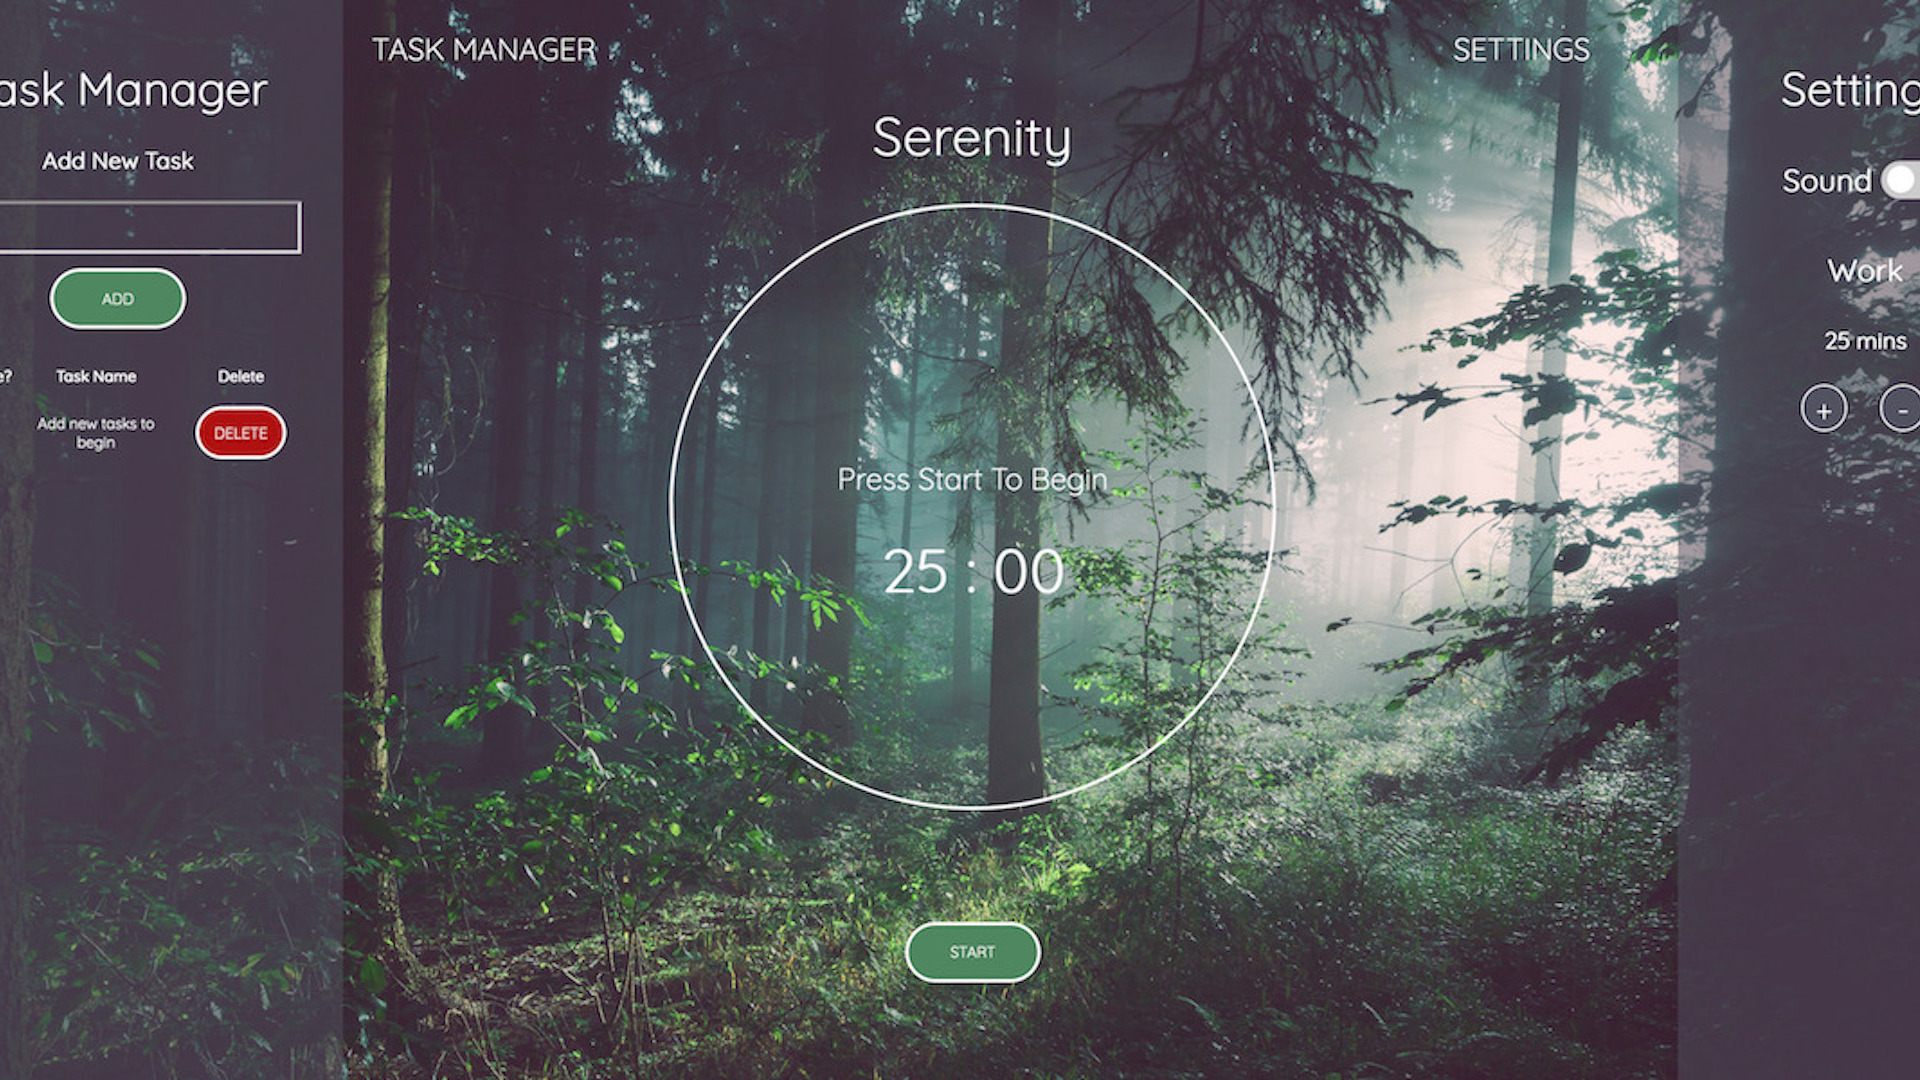 Serenity website screenshot.